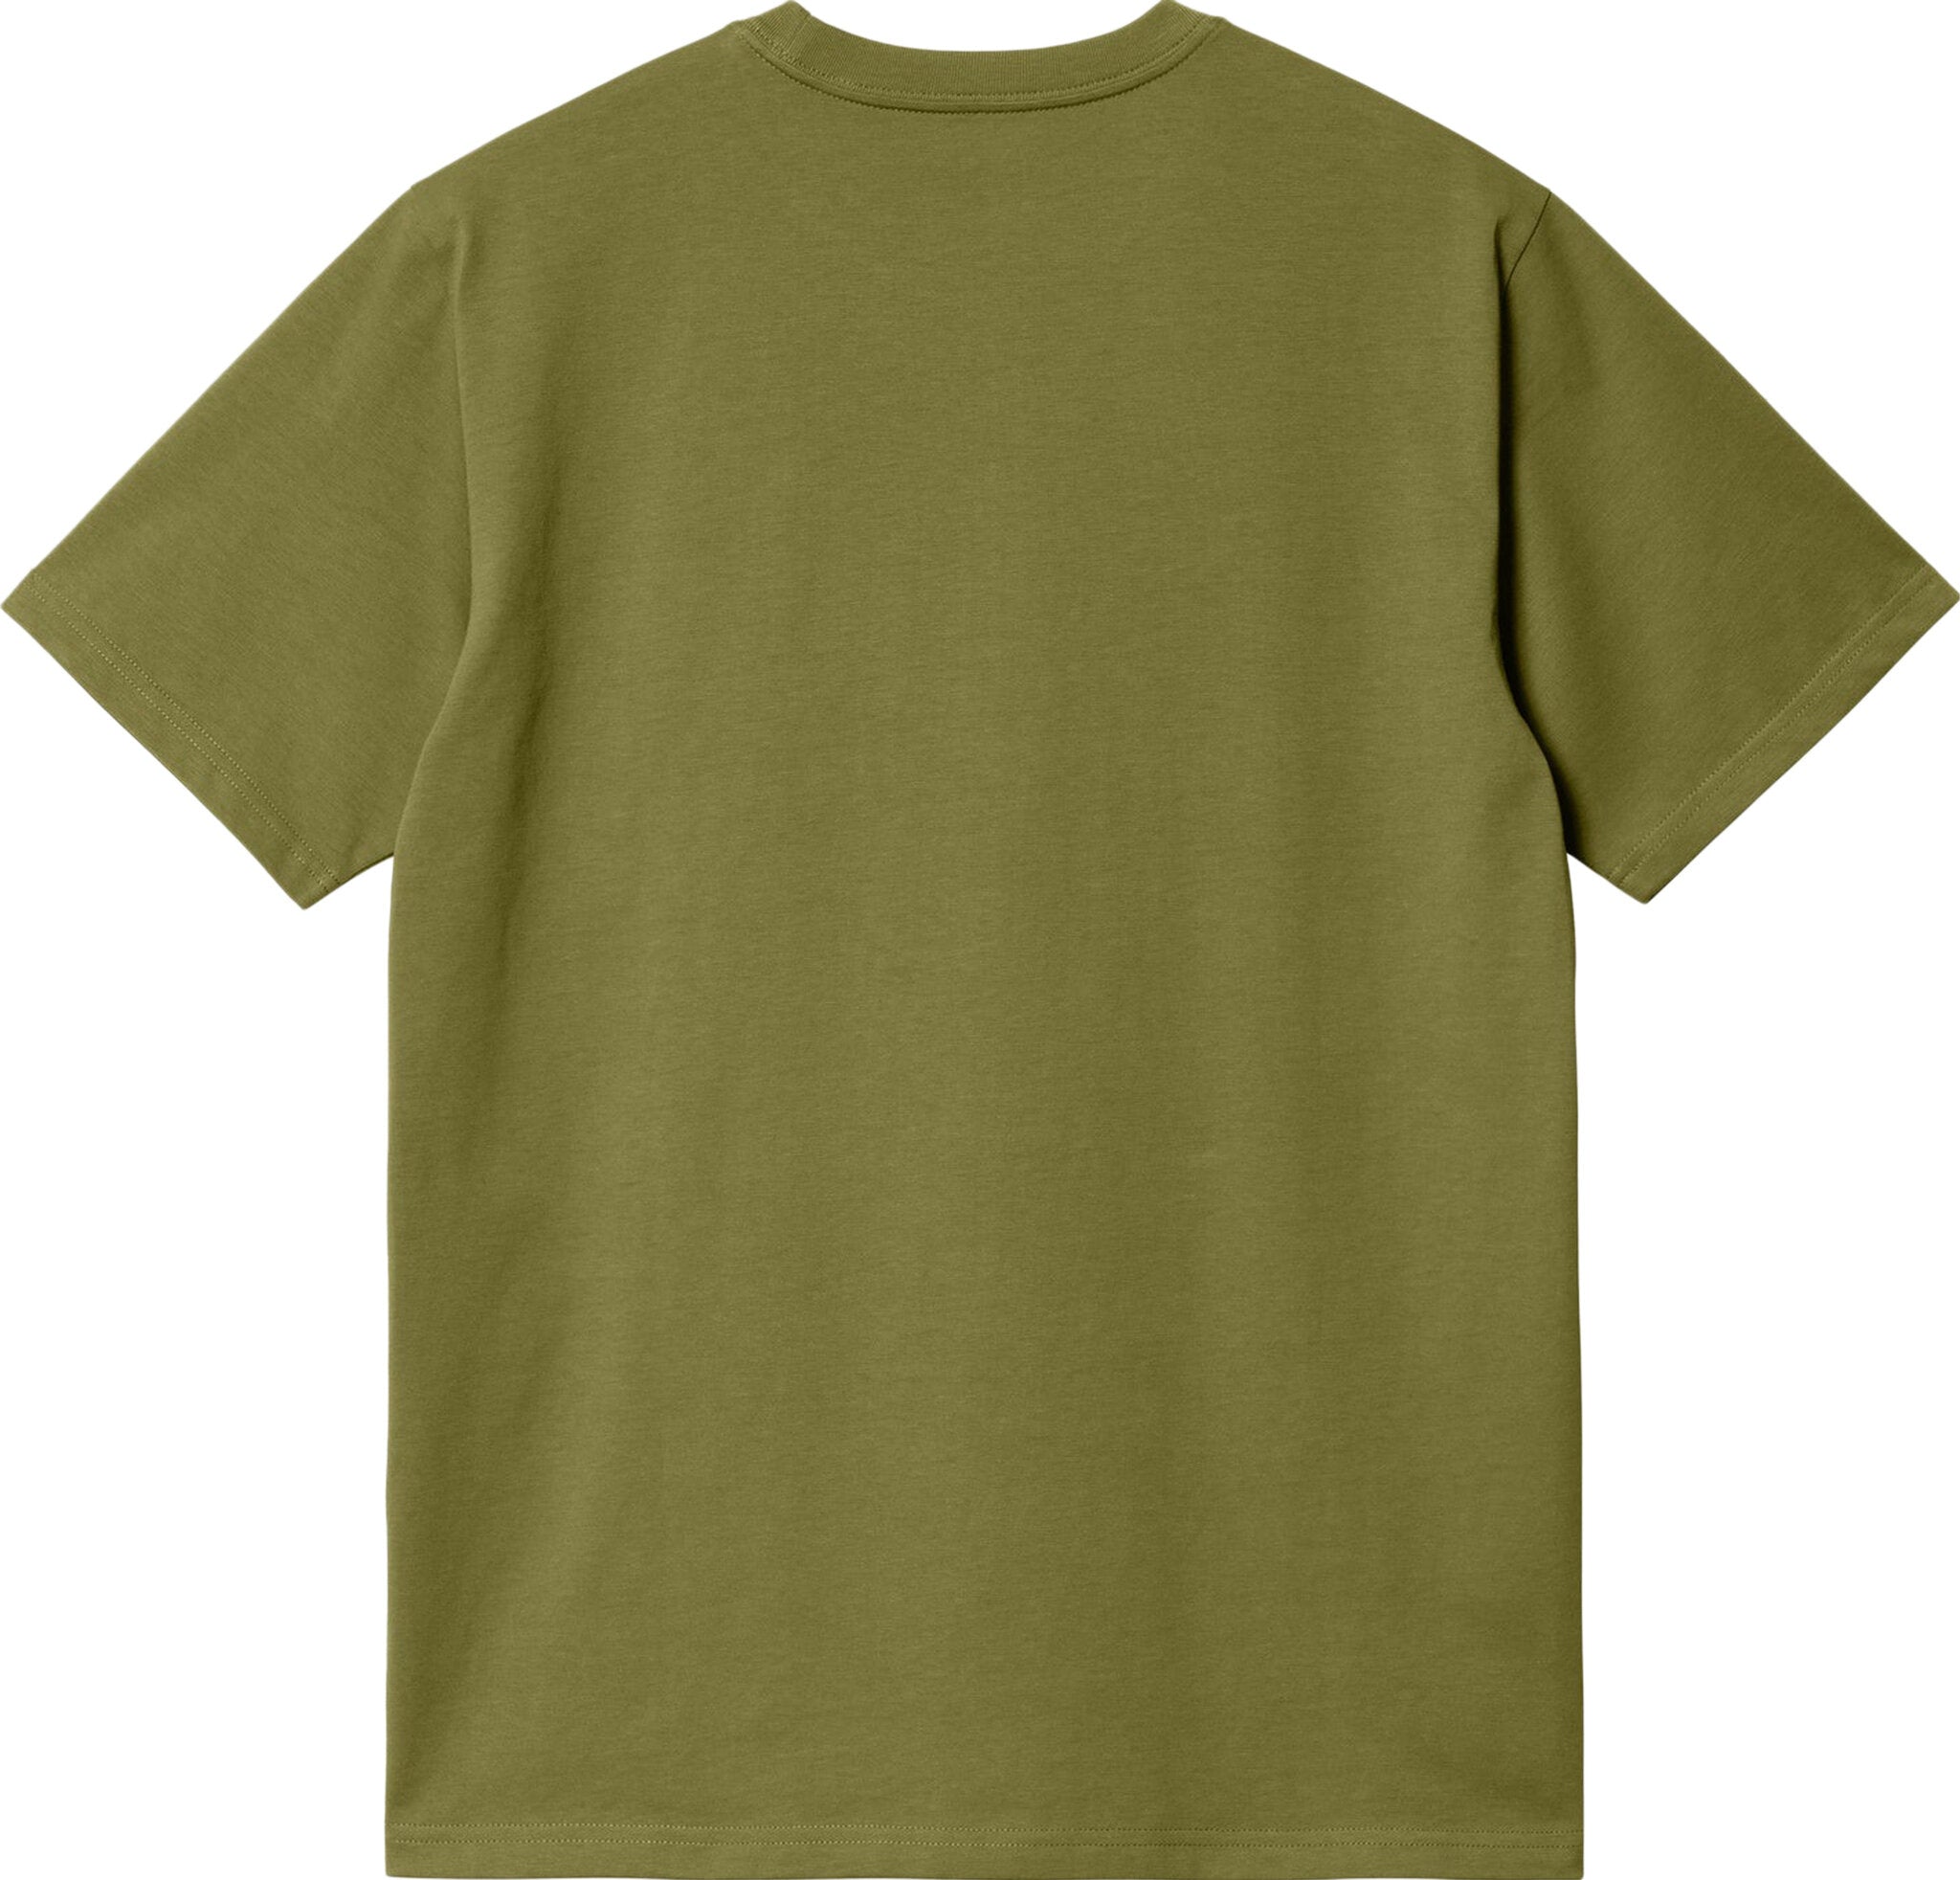 Carhartt WIP S/S Pocket T-shirt - Kiwi S